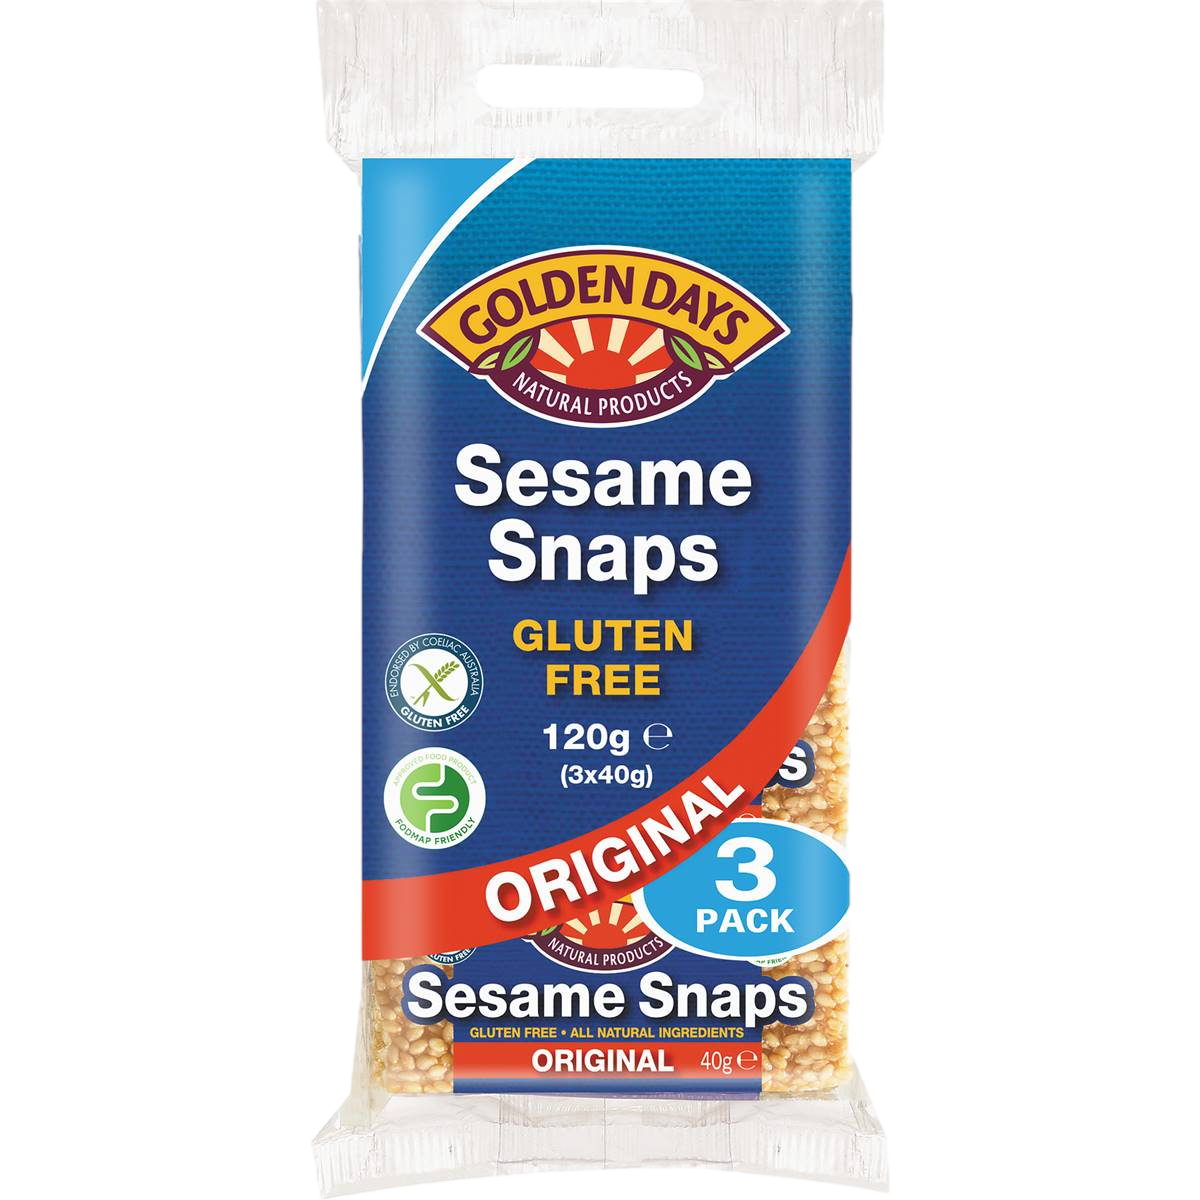 Golden Days Sesame Snaps Original 120g 3 Pack